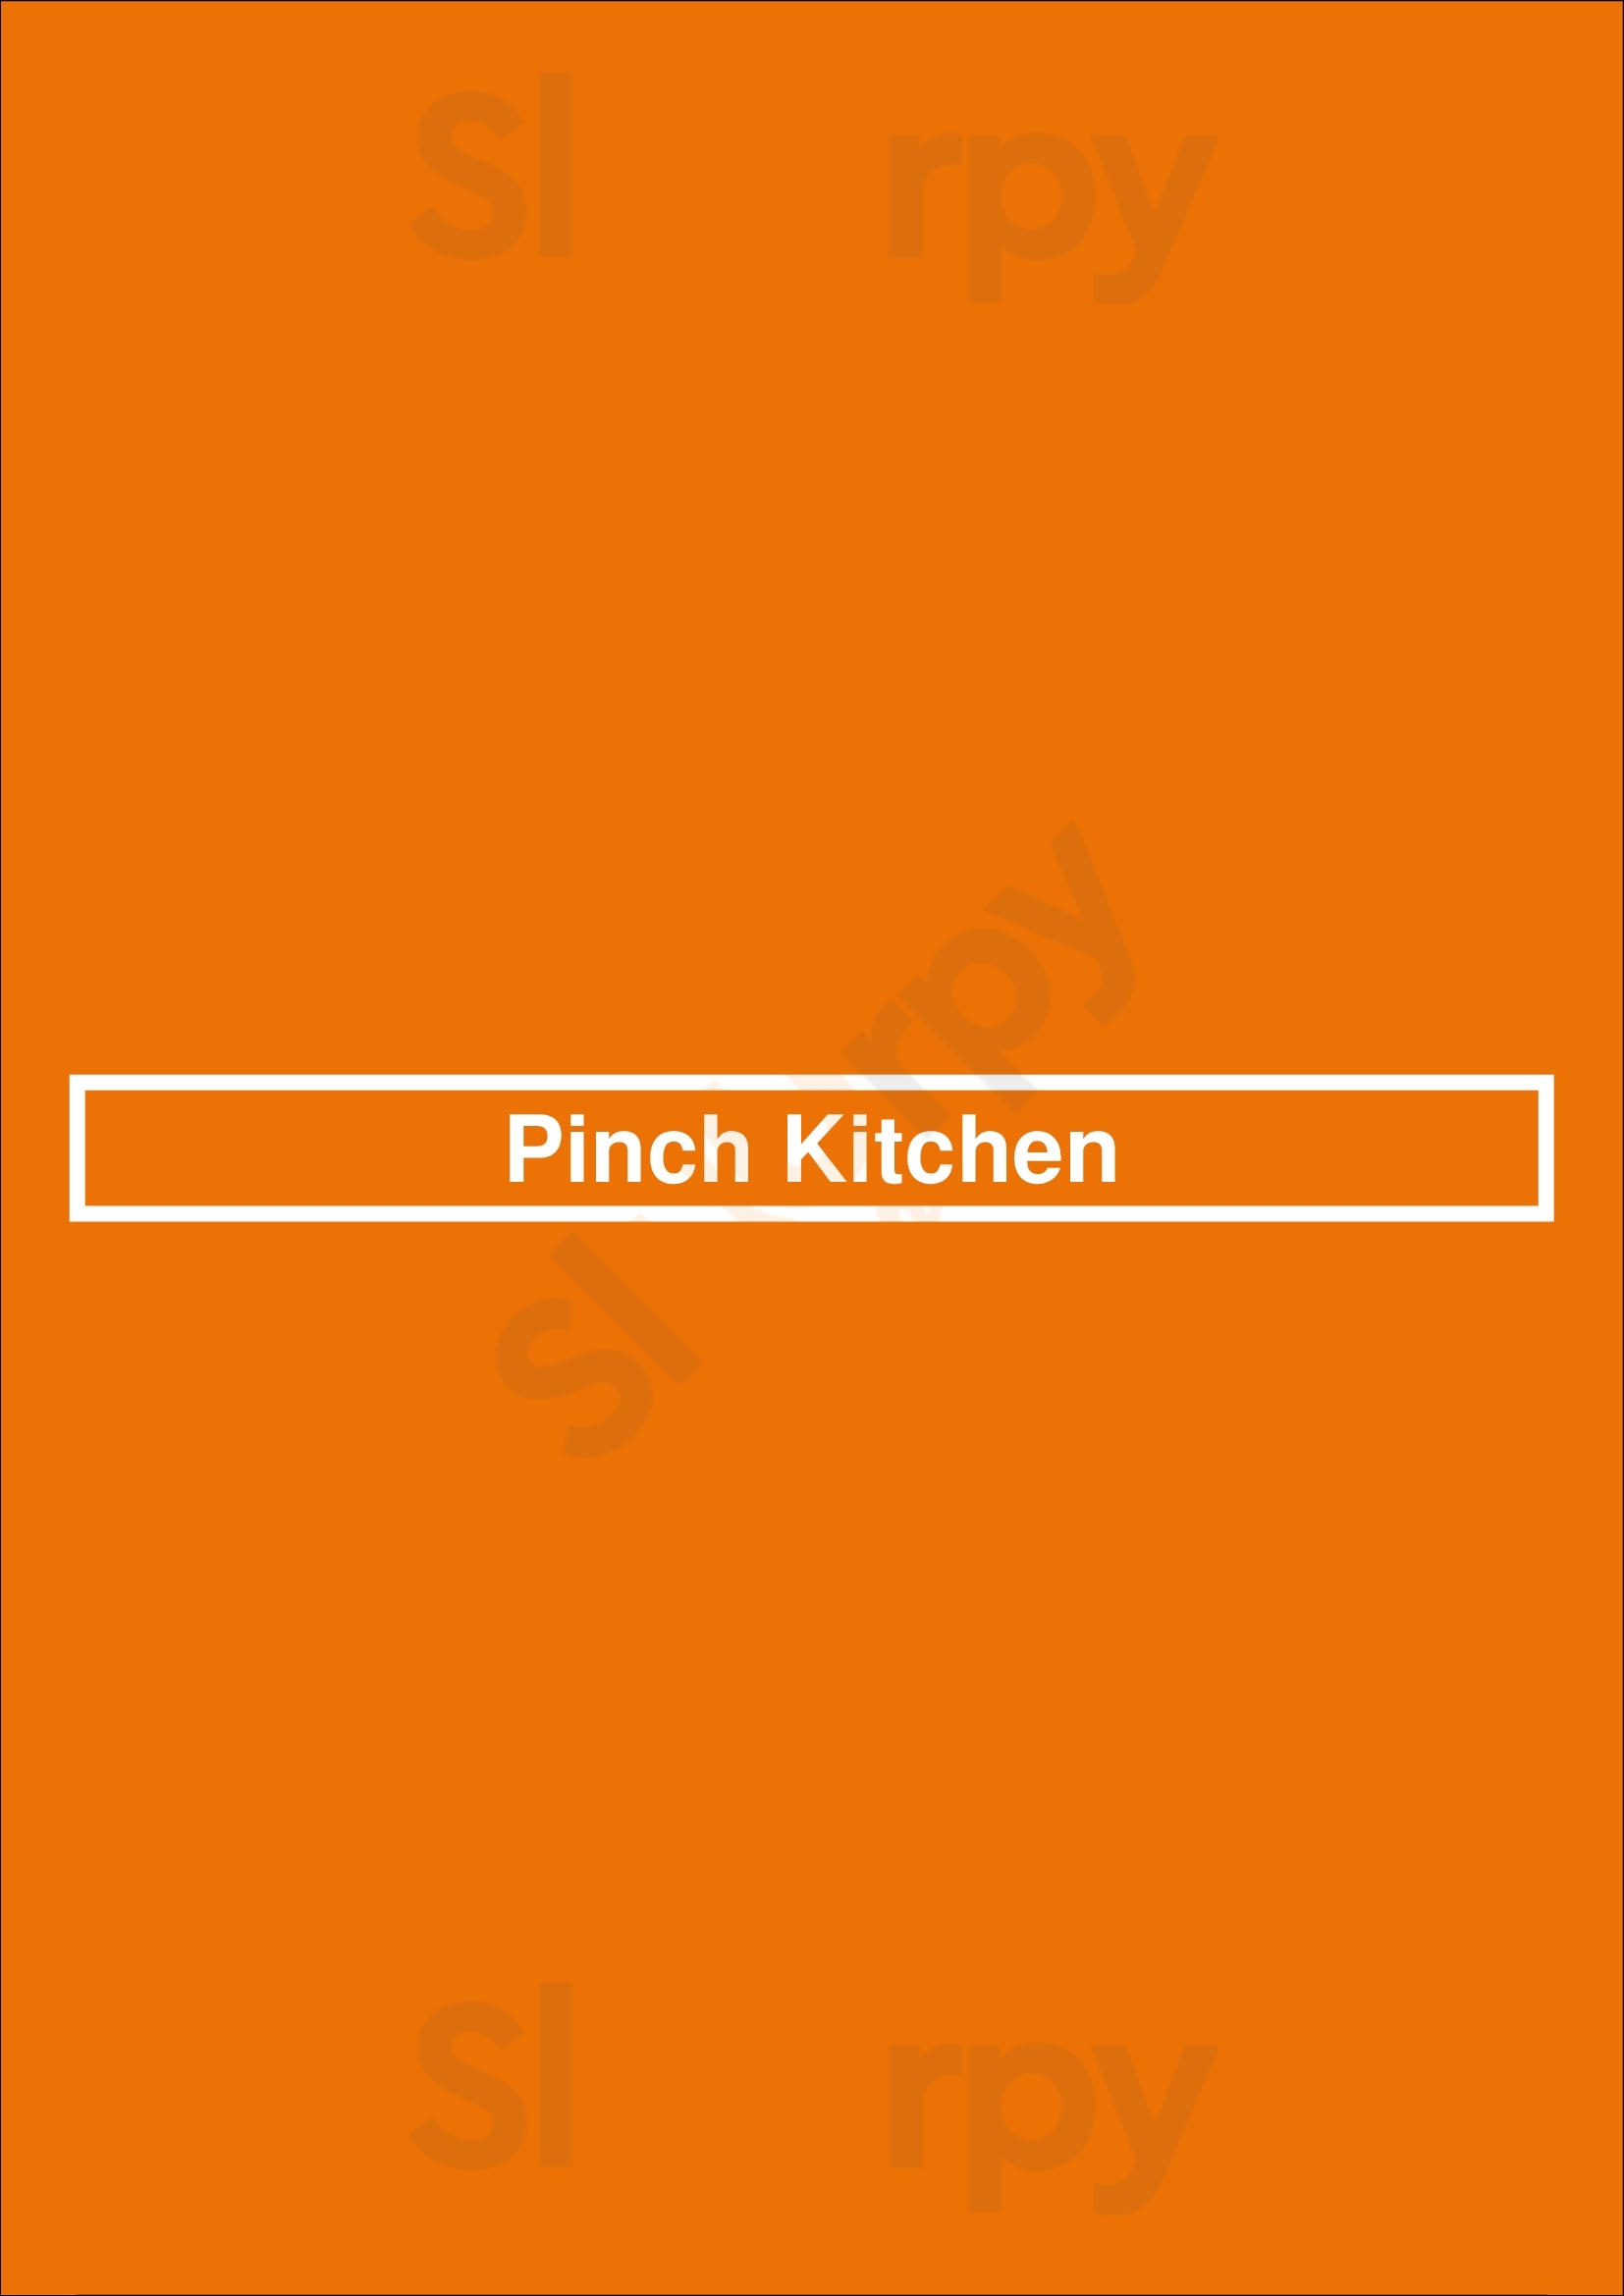 Pinch Kitchen Miami Menu - 1